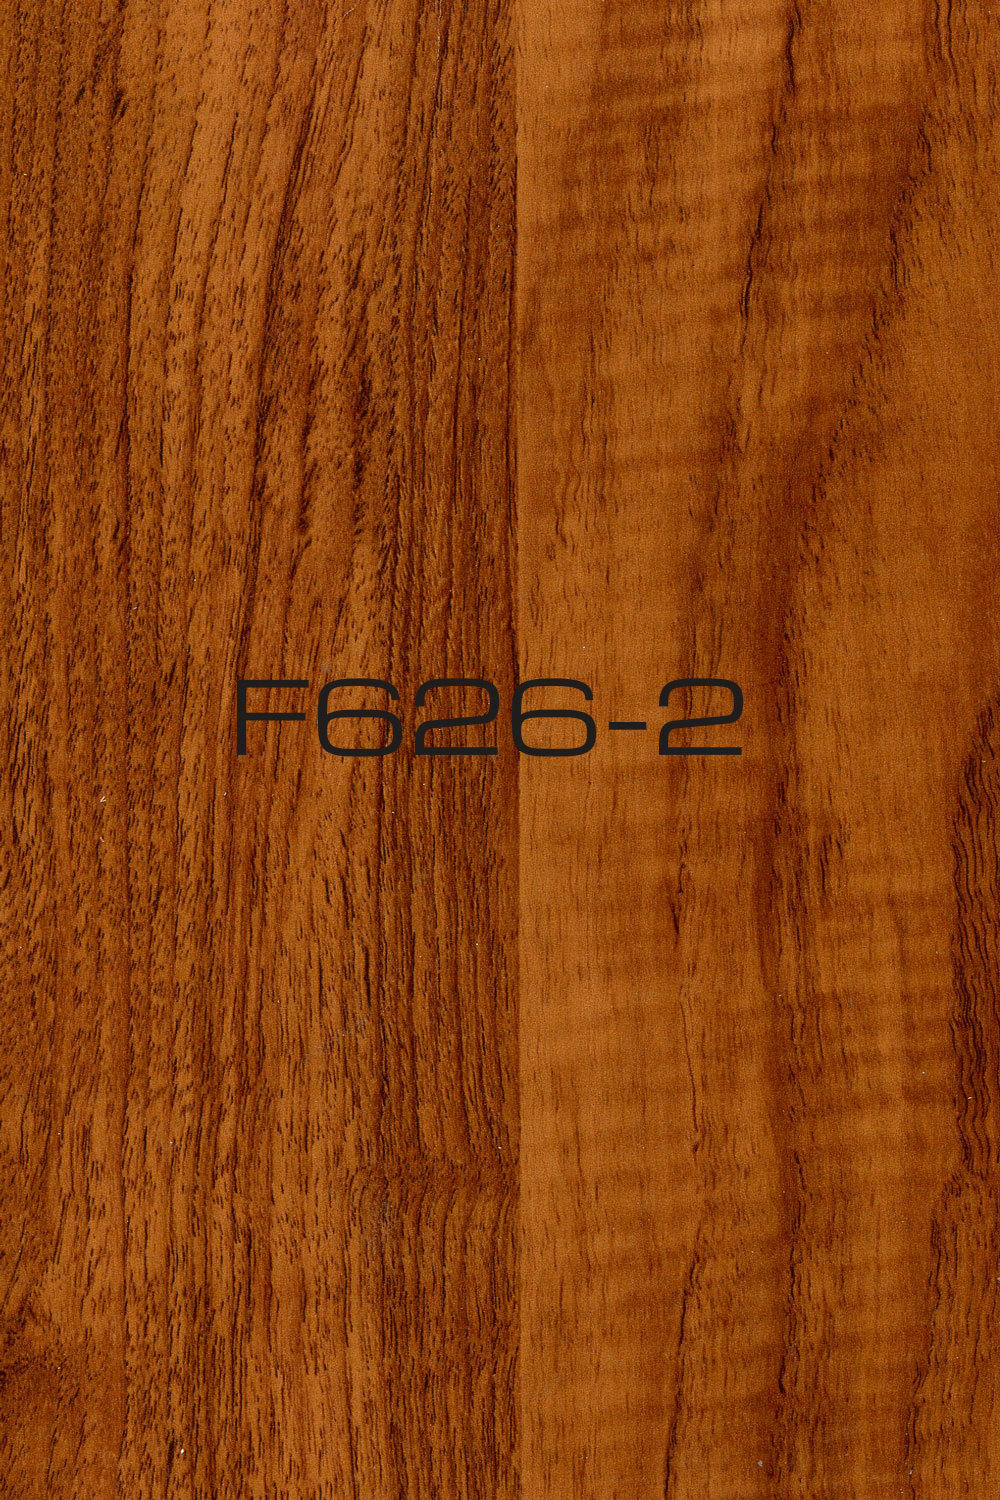 sàn gỗ f626-2